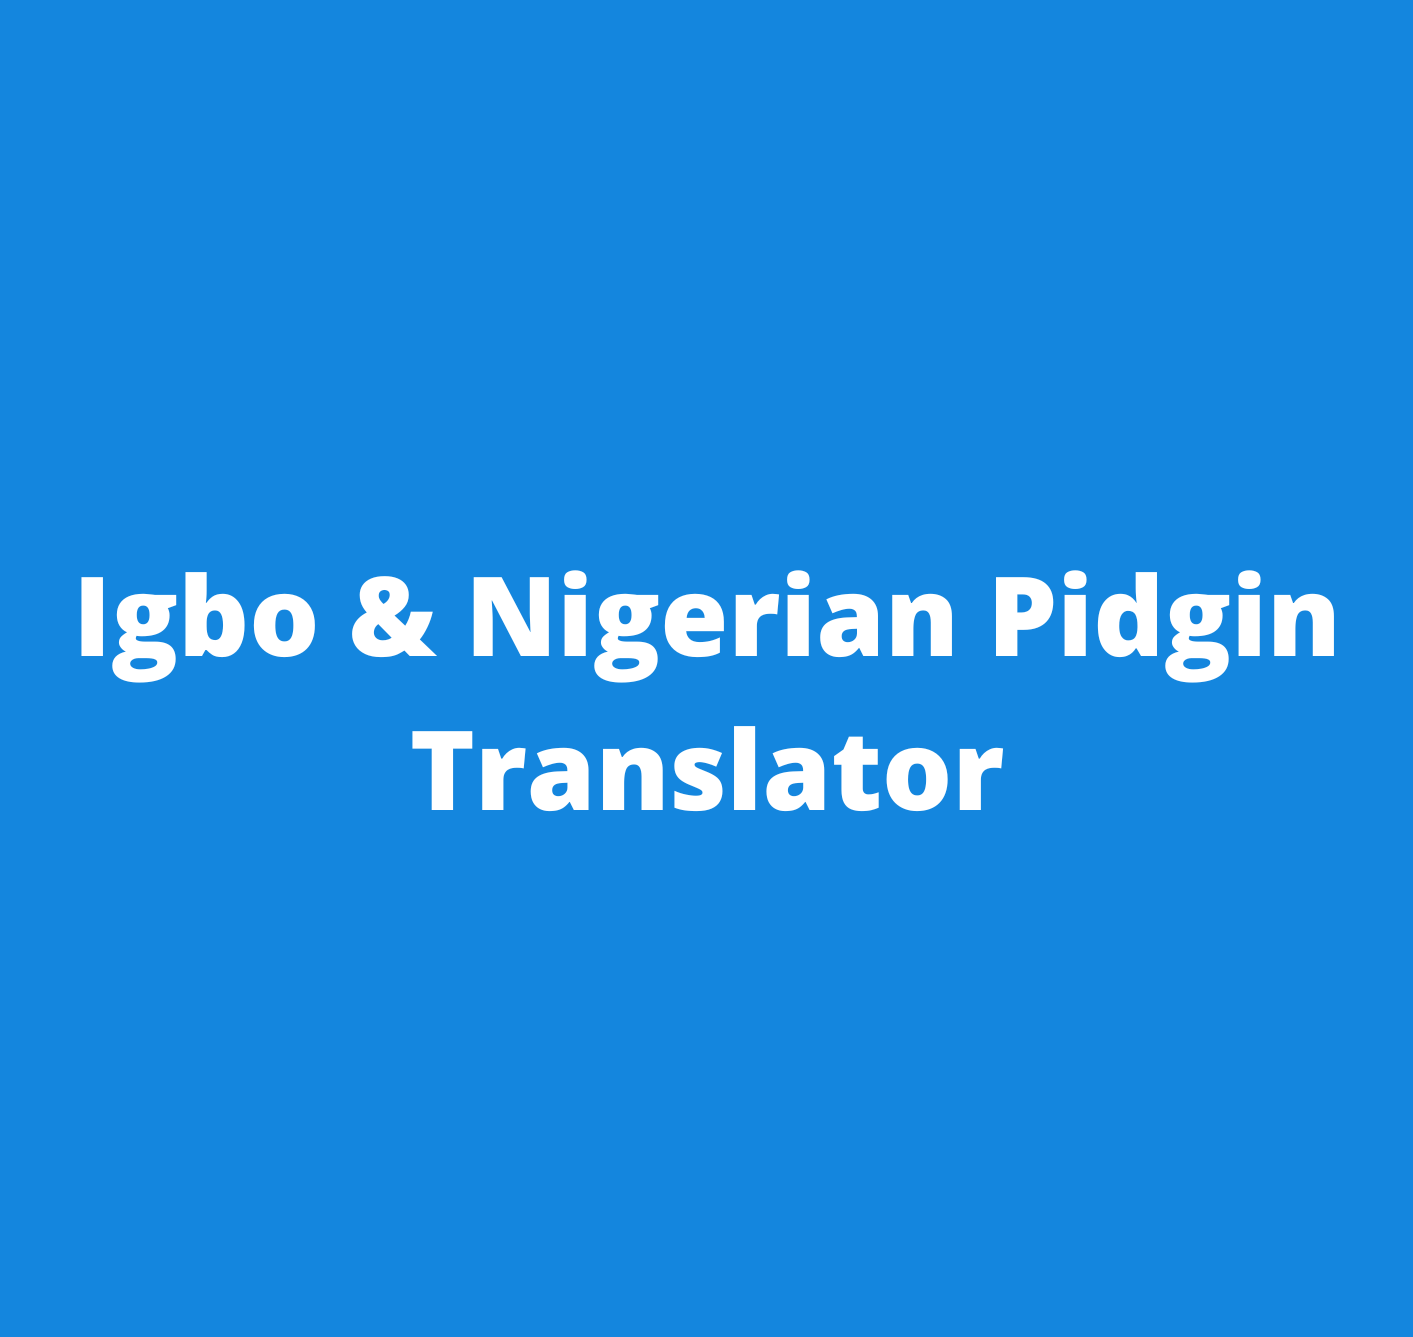 Igbo & Nigerian Pidgin Translator